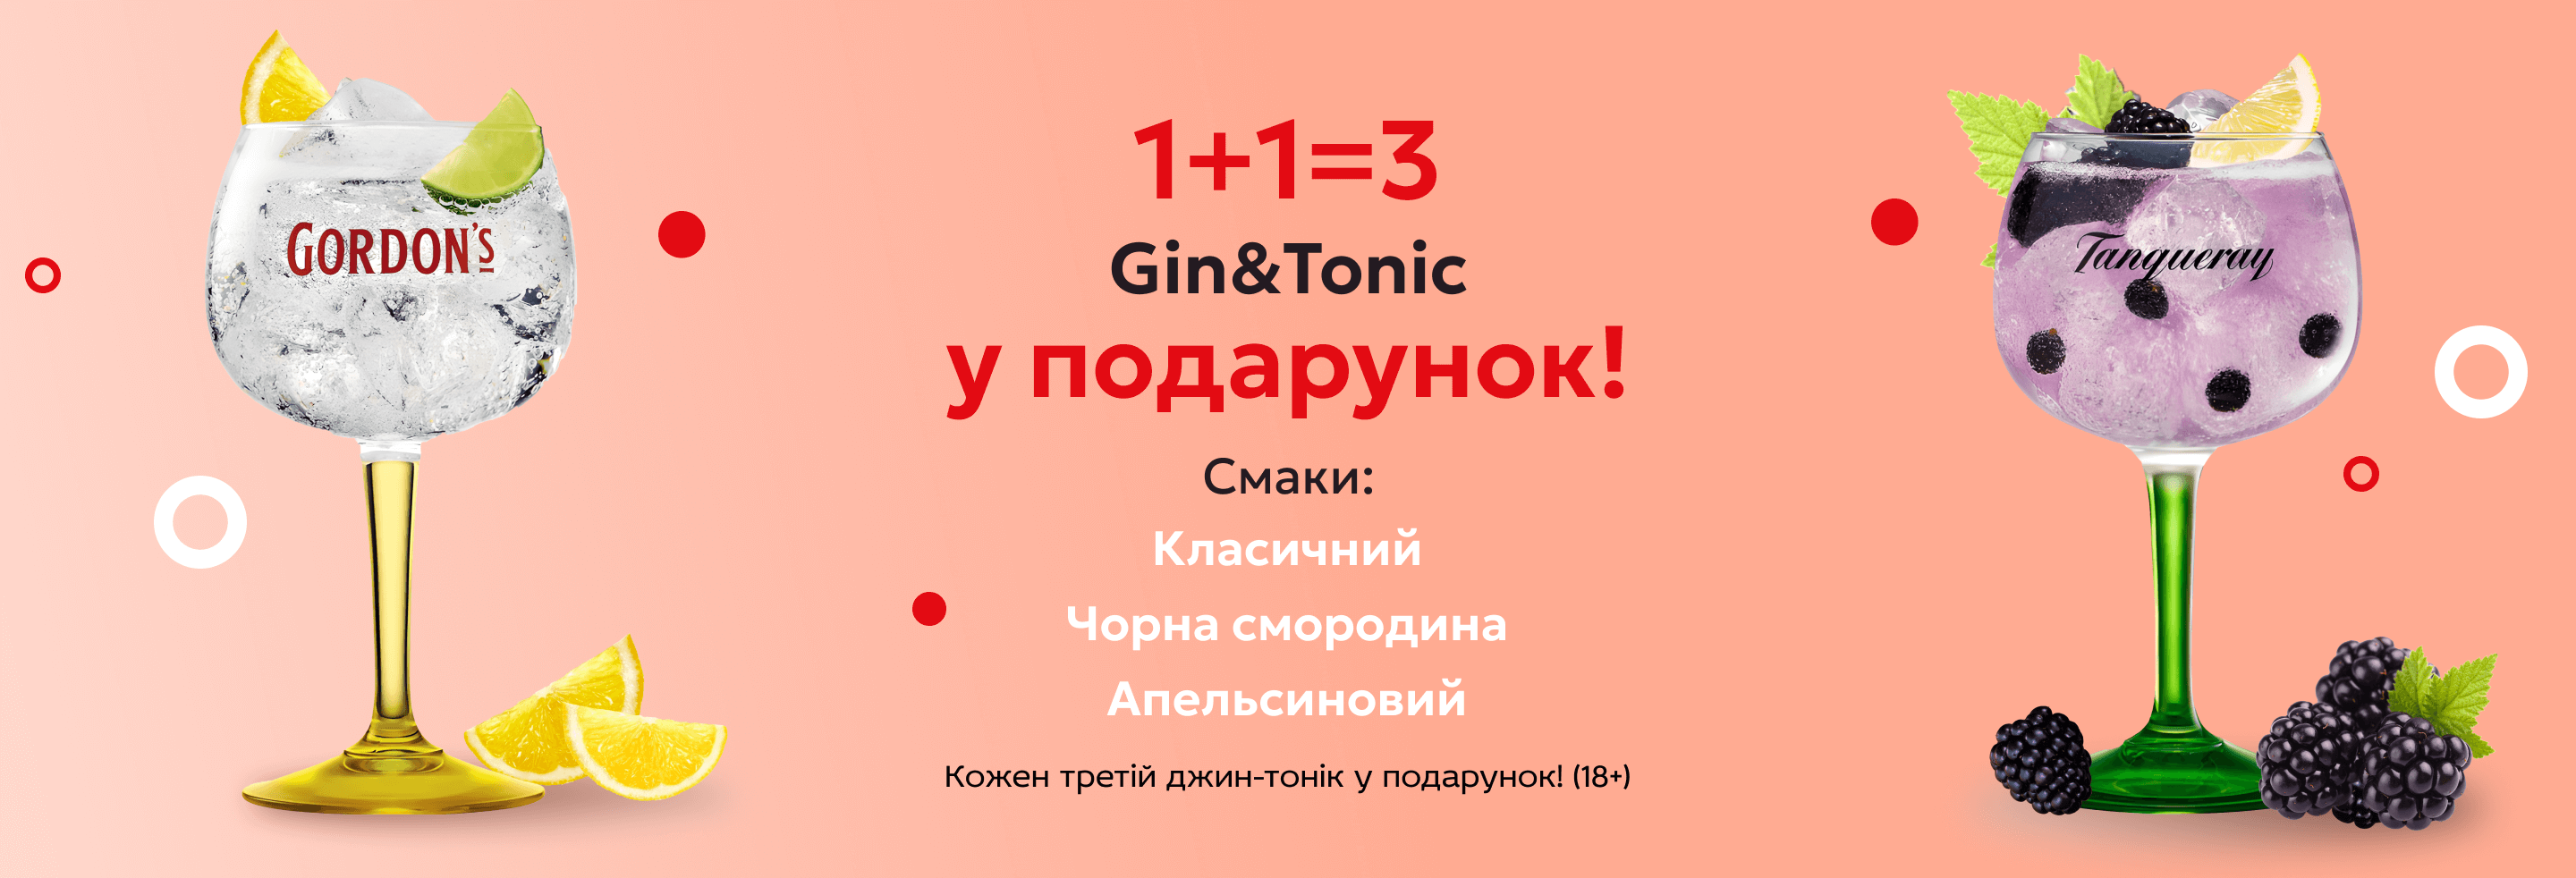 1+1=3 Gin&Tonic у подарунок!